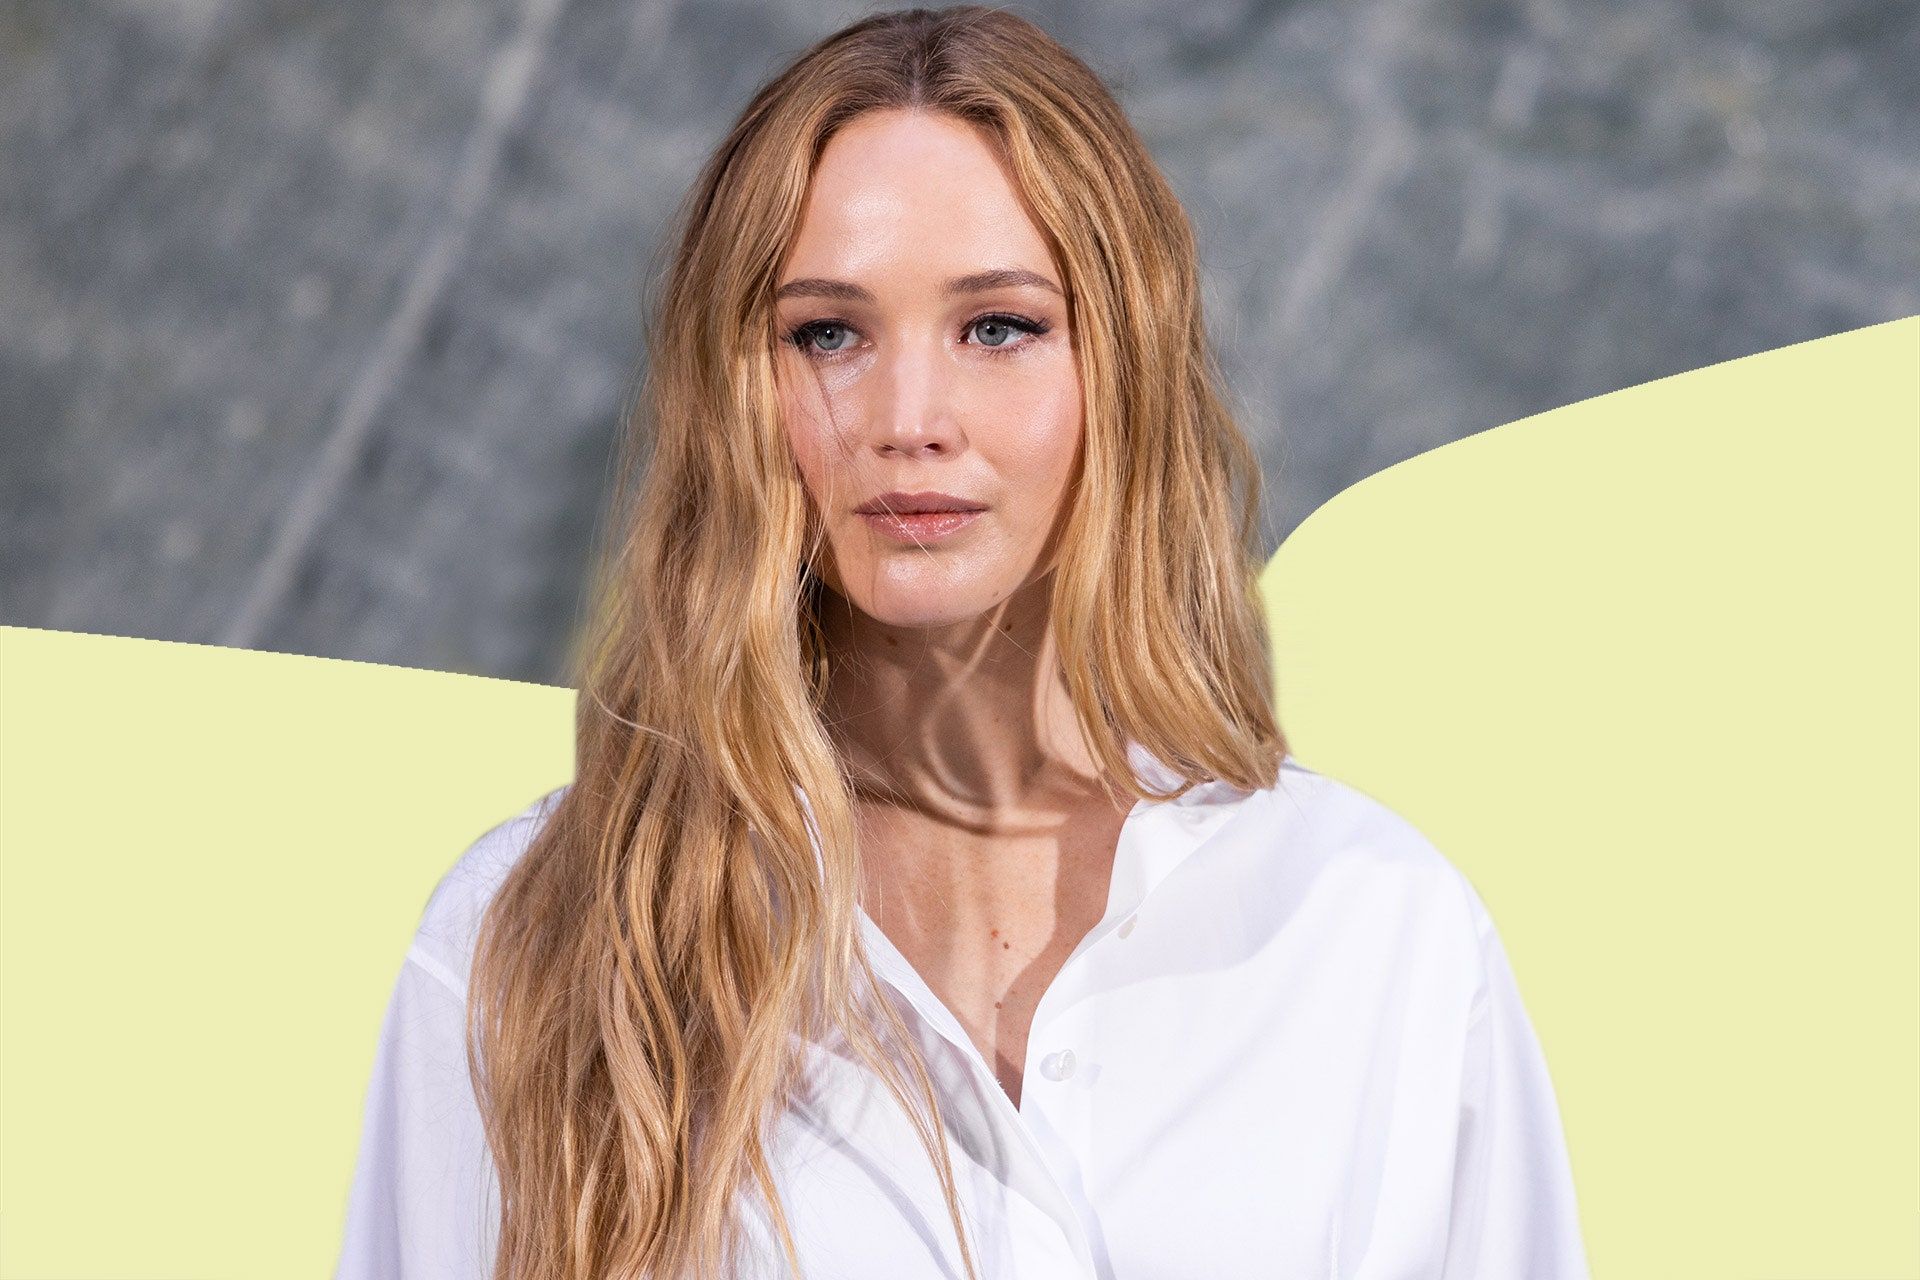 Jennifer Lawrence's latest Instagram post is a powerful message about body image - Jennifer Lawrence